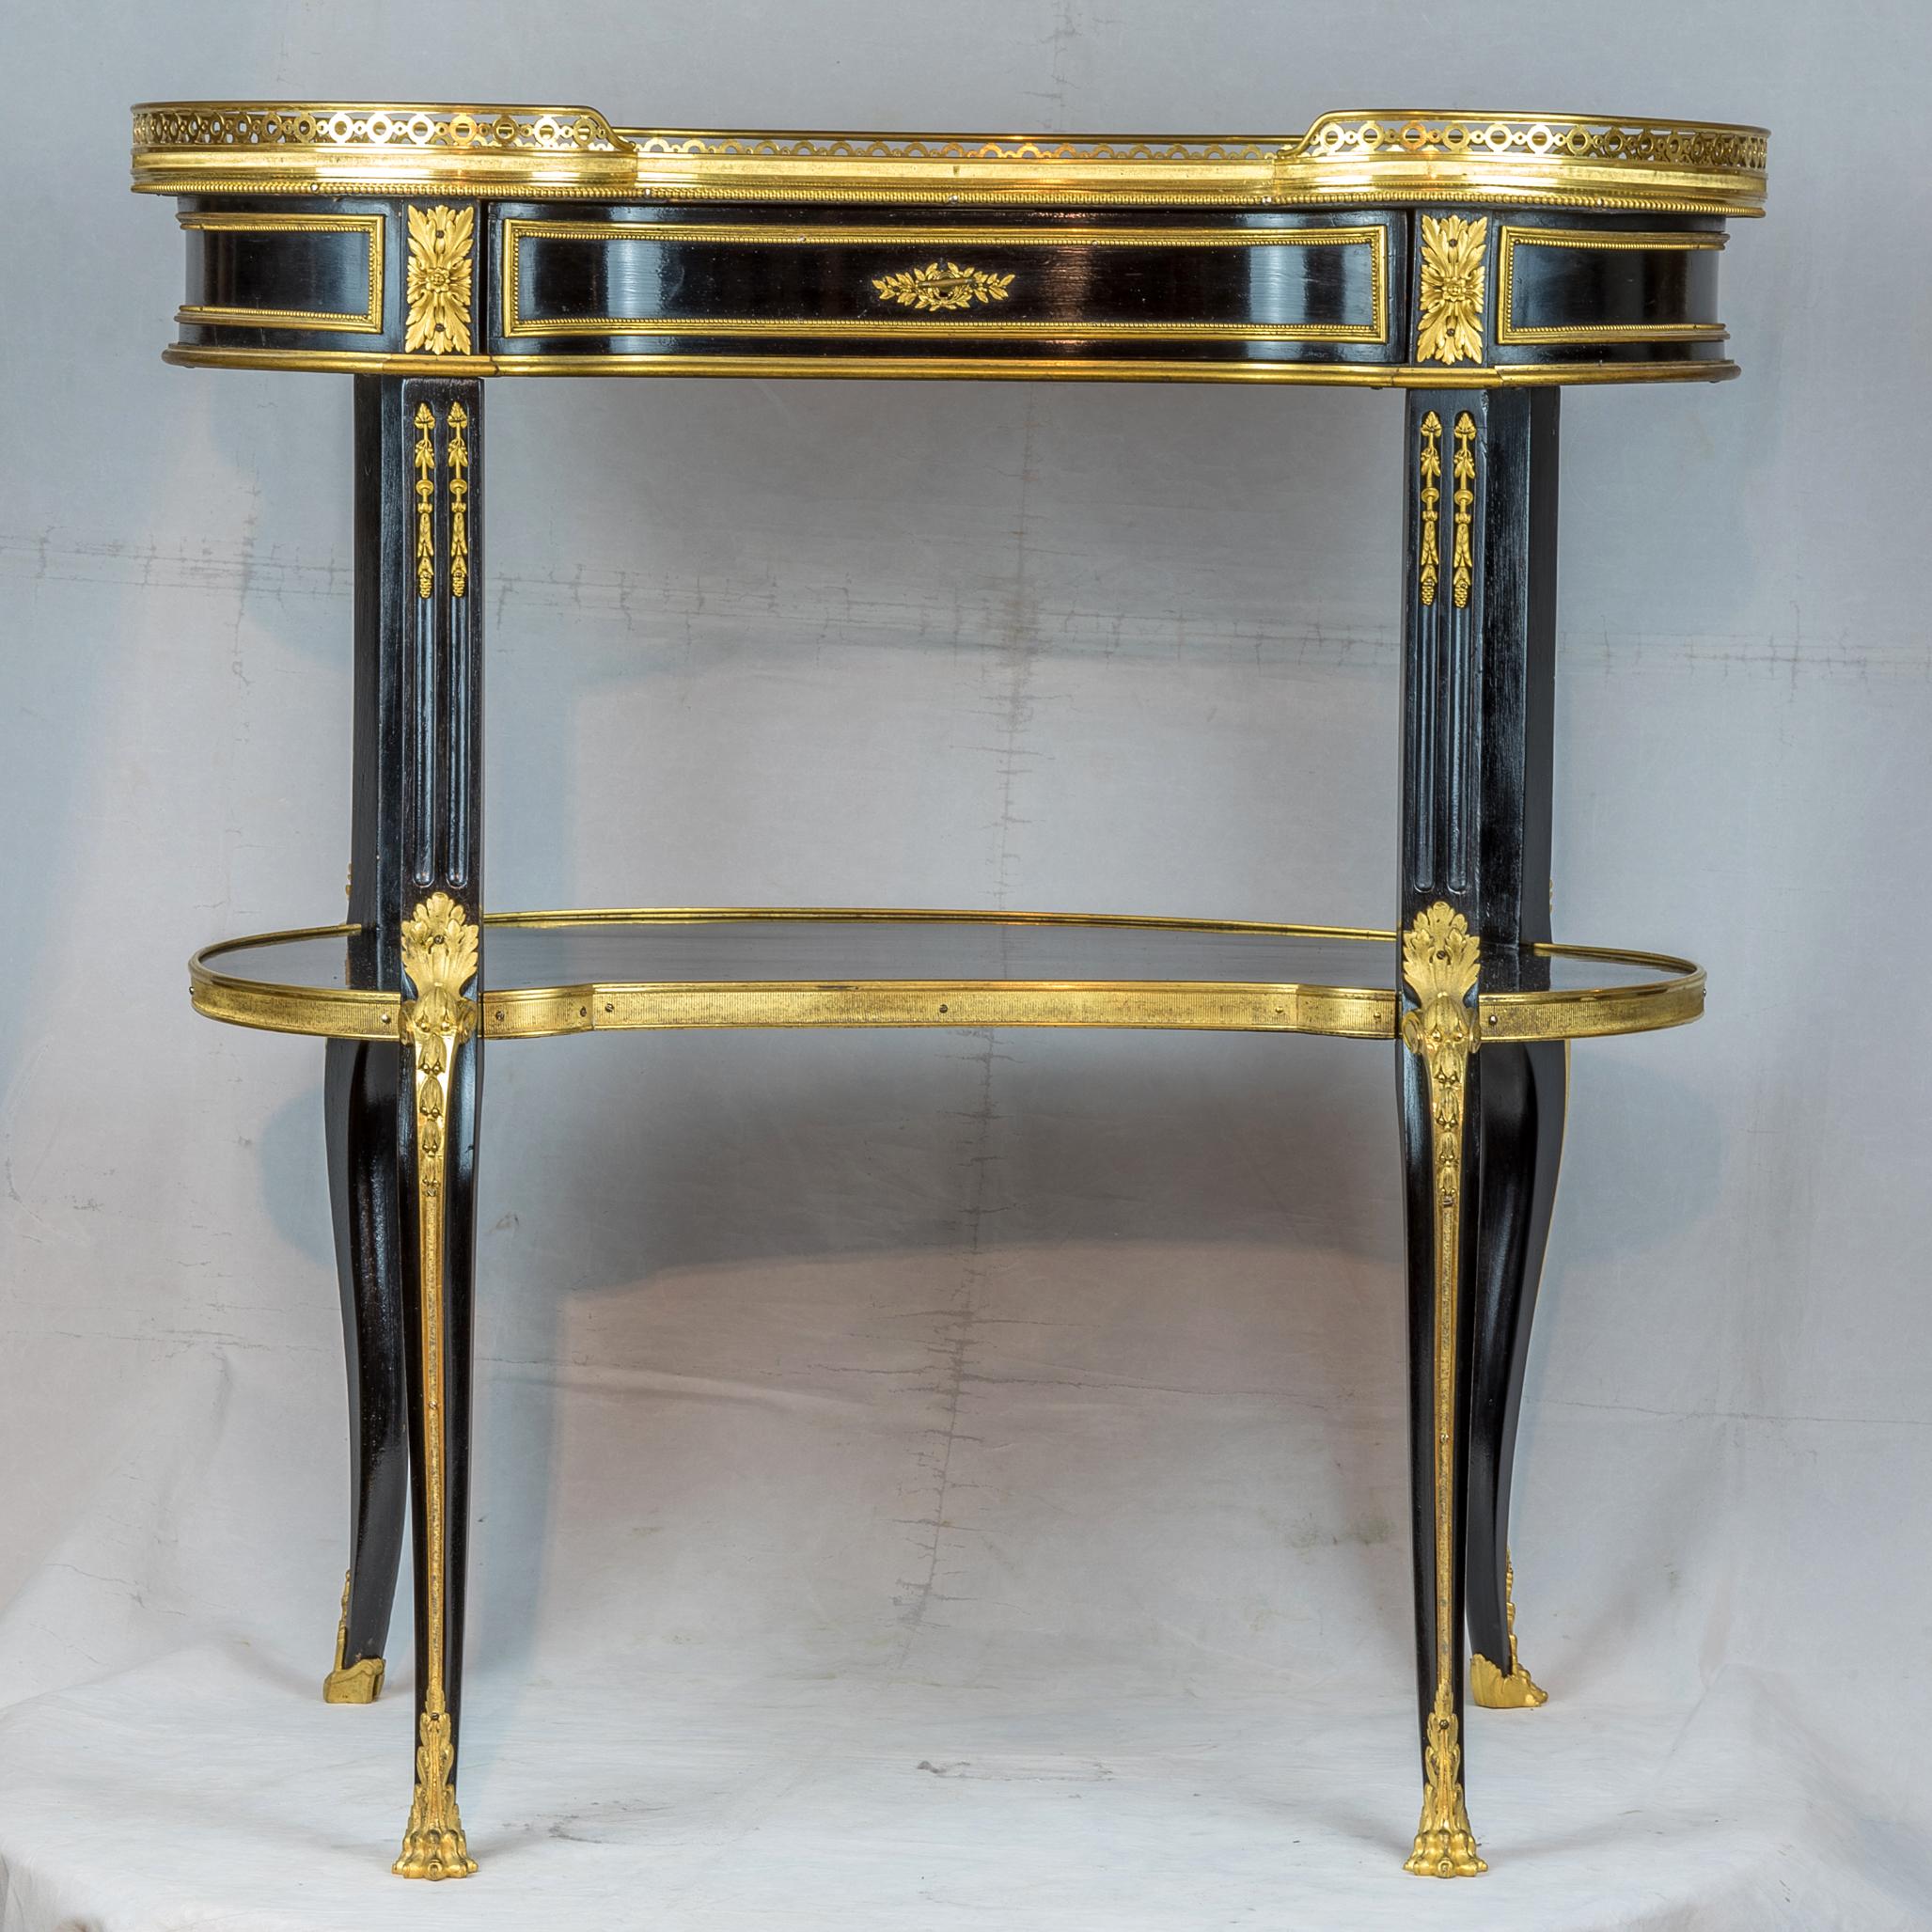 Fine quality Louis XVI style gilt bronze mounted ebonized writing table.
A gorgeous French ormolu-mounted ebonized writing table.

Date: 19th century
Origin: French
Dimension: 28 x 27 x 17 inches.